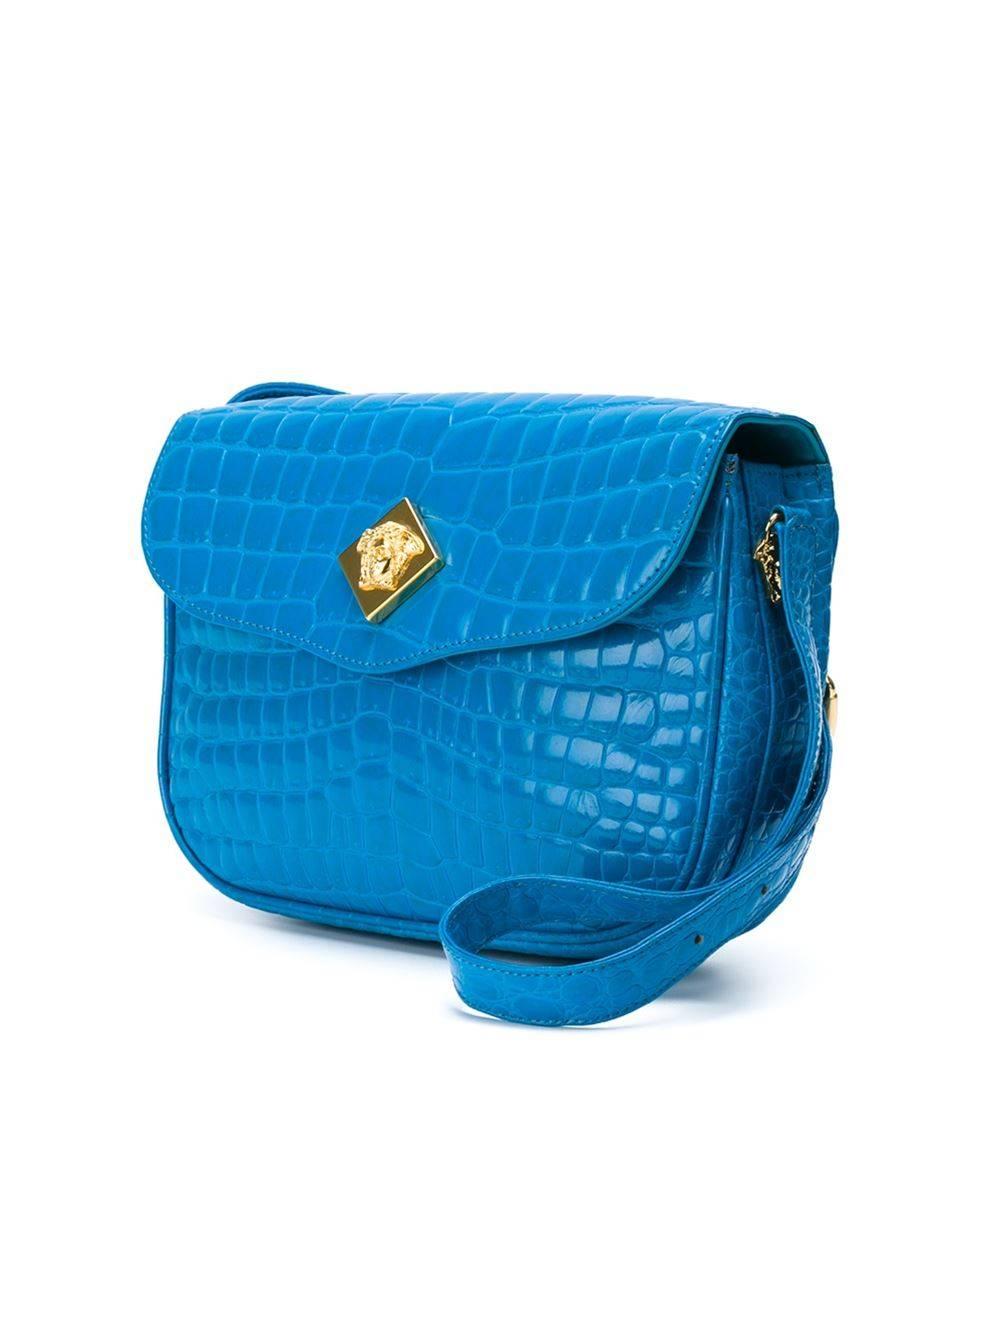 versace blue purse